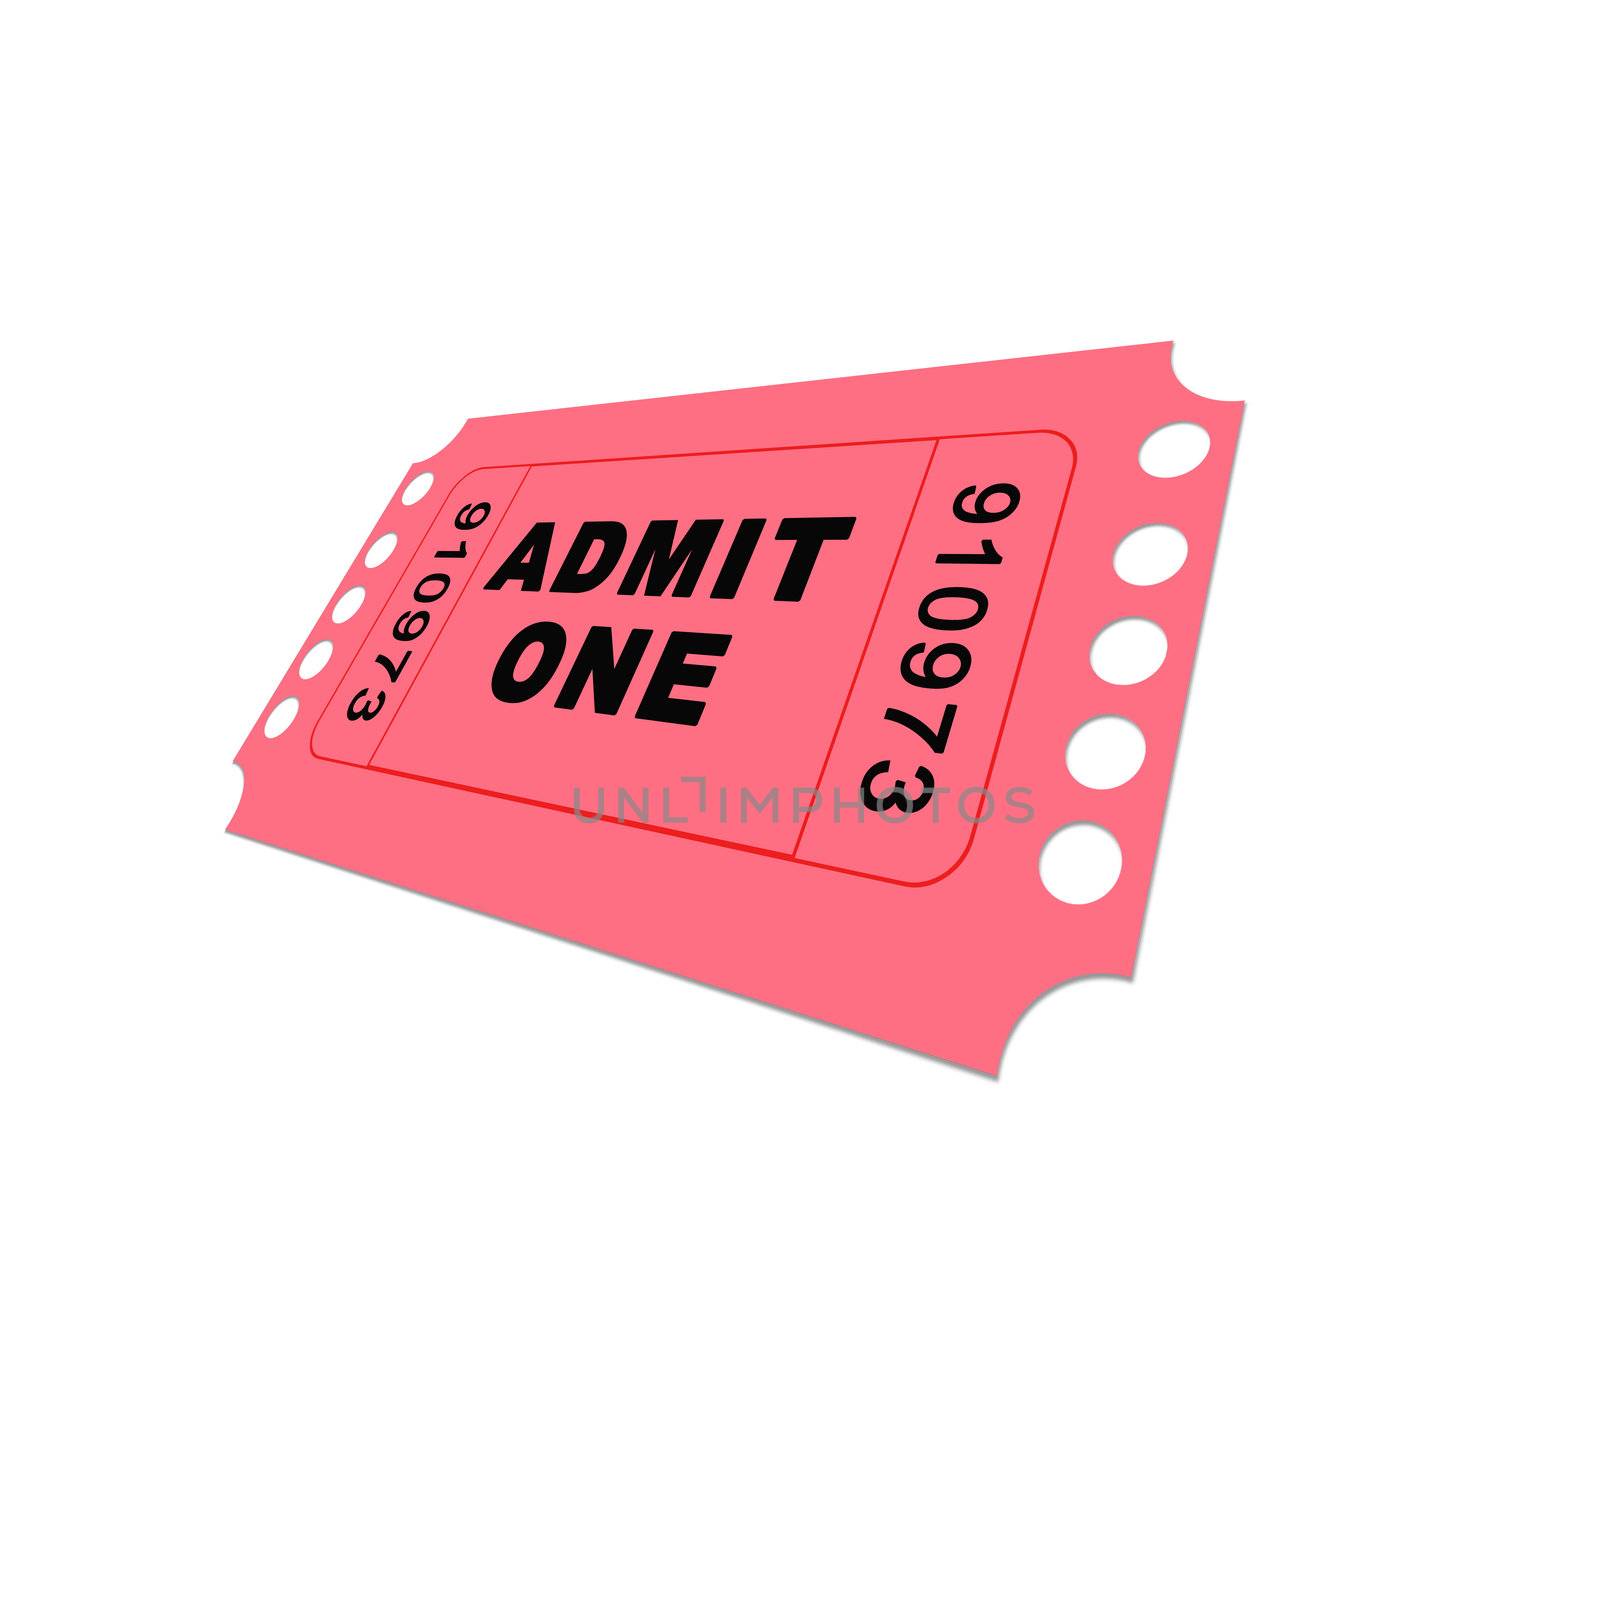 Cinema Ticket by sacatani